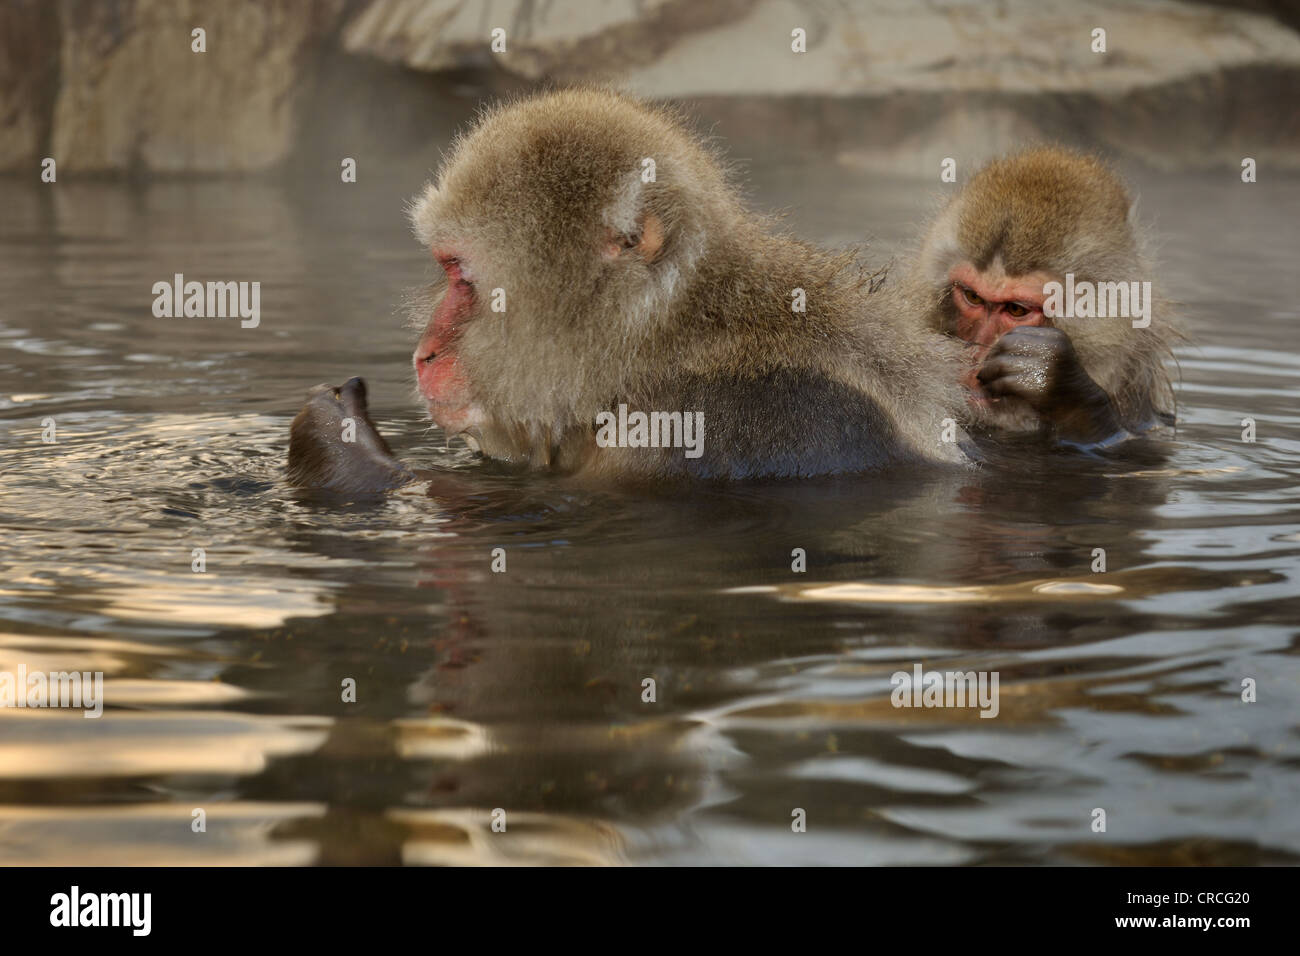 Macaque giapponese (Macaca fuscata) governare in una primavera calda, Jigokudani Monkey Park, Nagano, Giappone Foto Stock